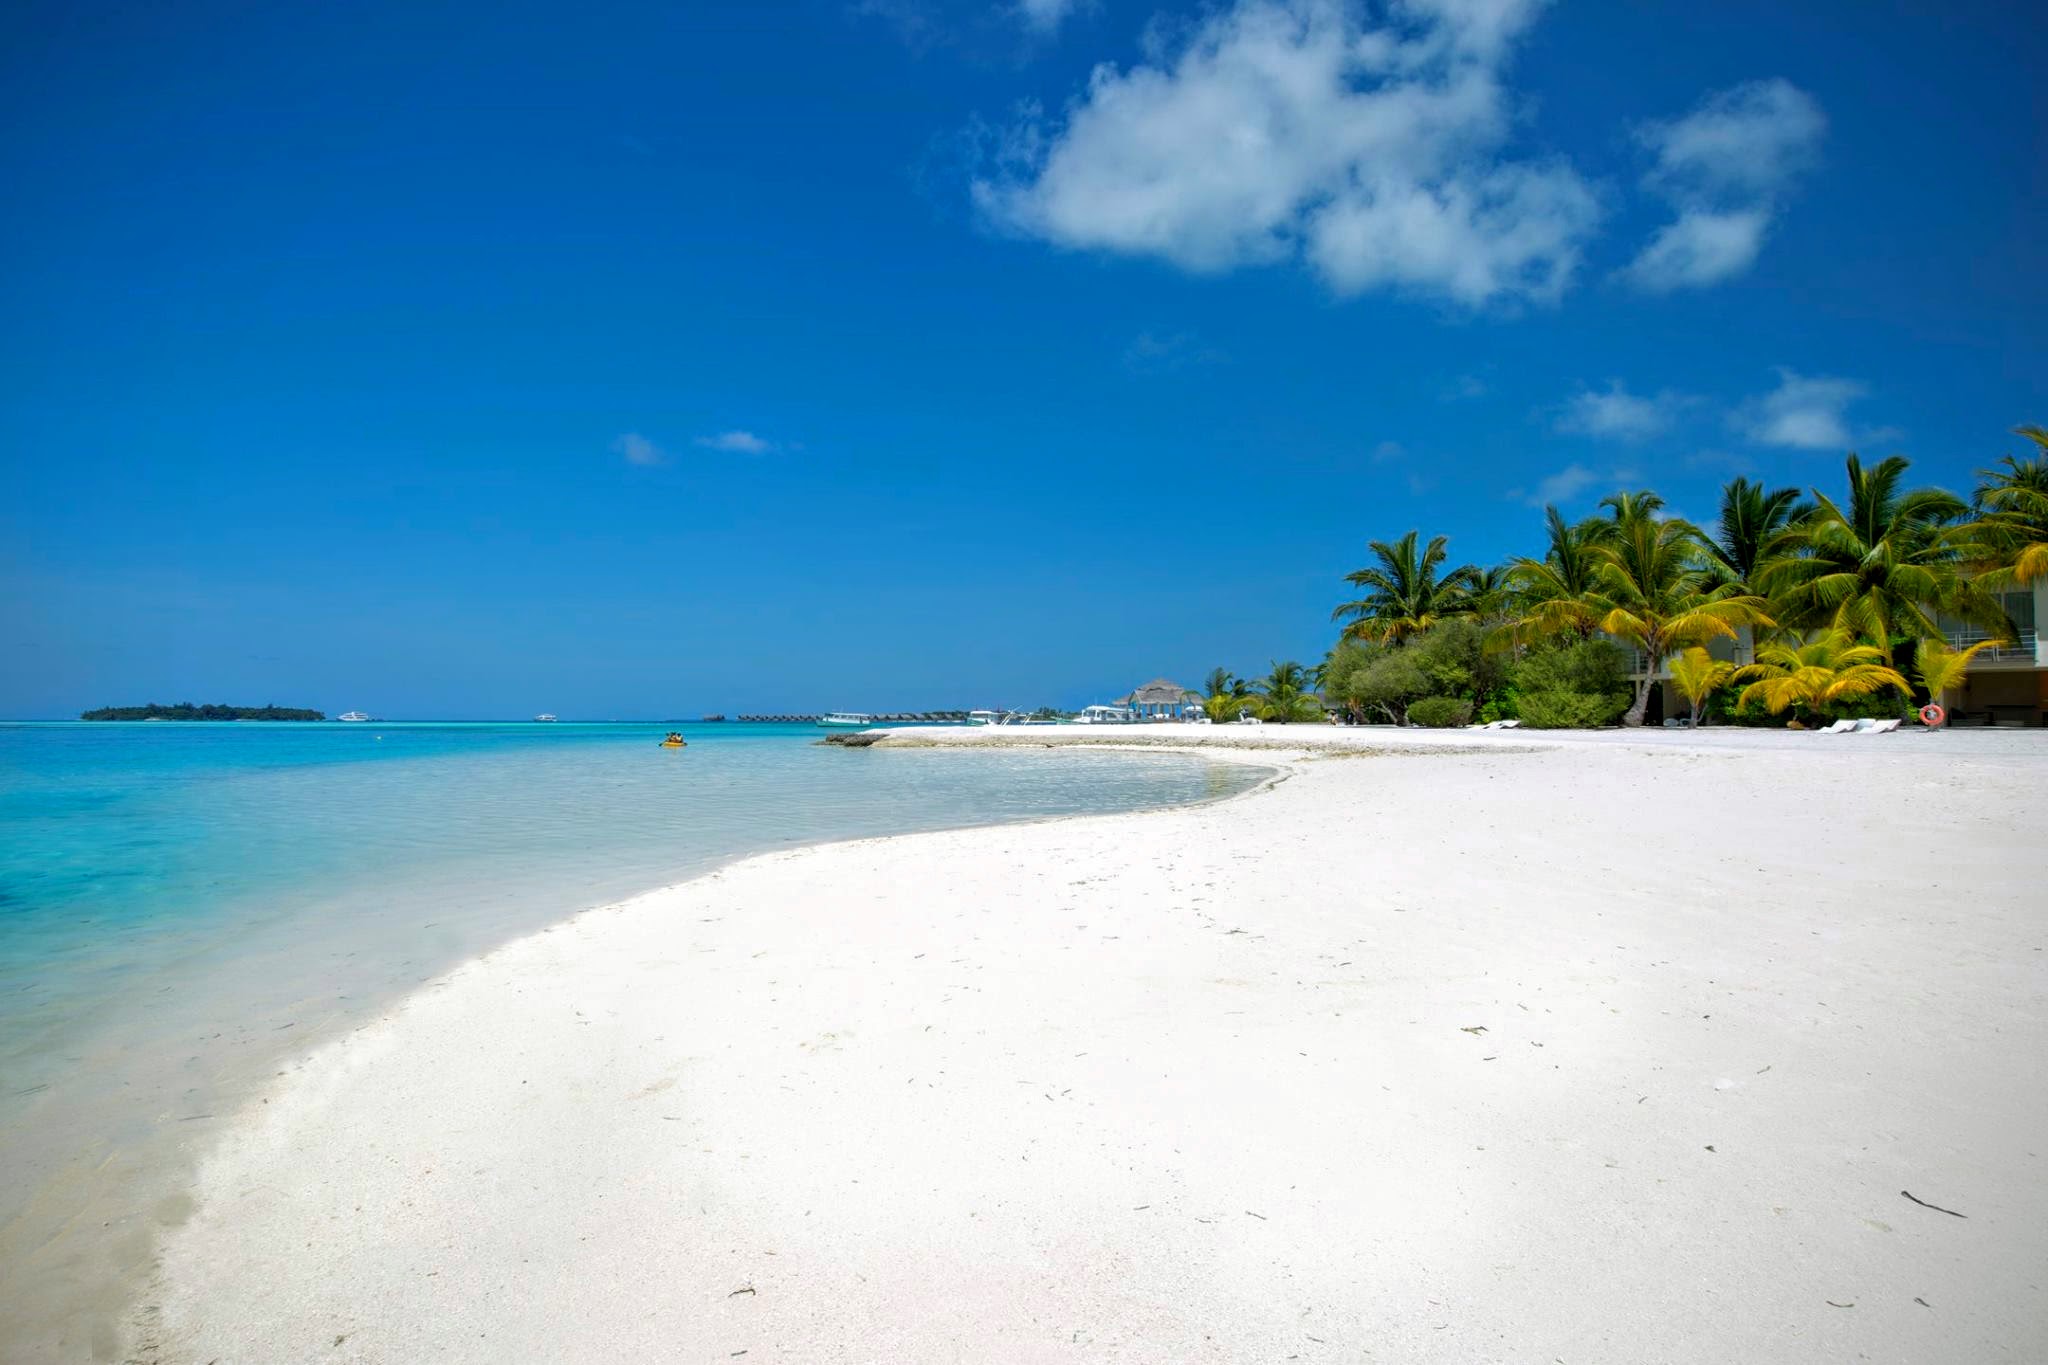 Holiday Inn Resort® Kandooma Maldives